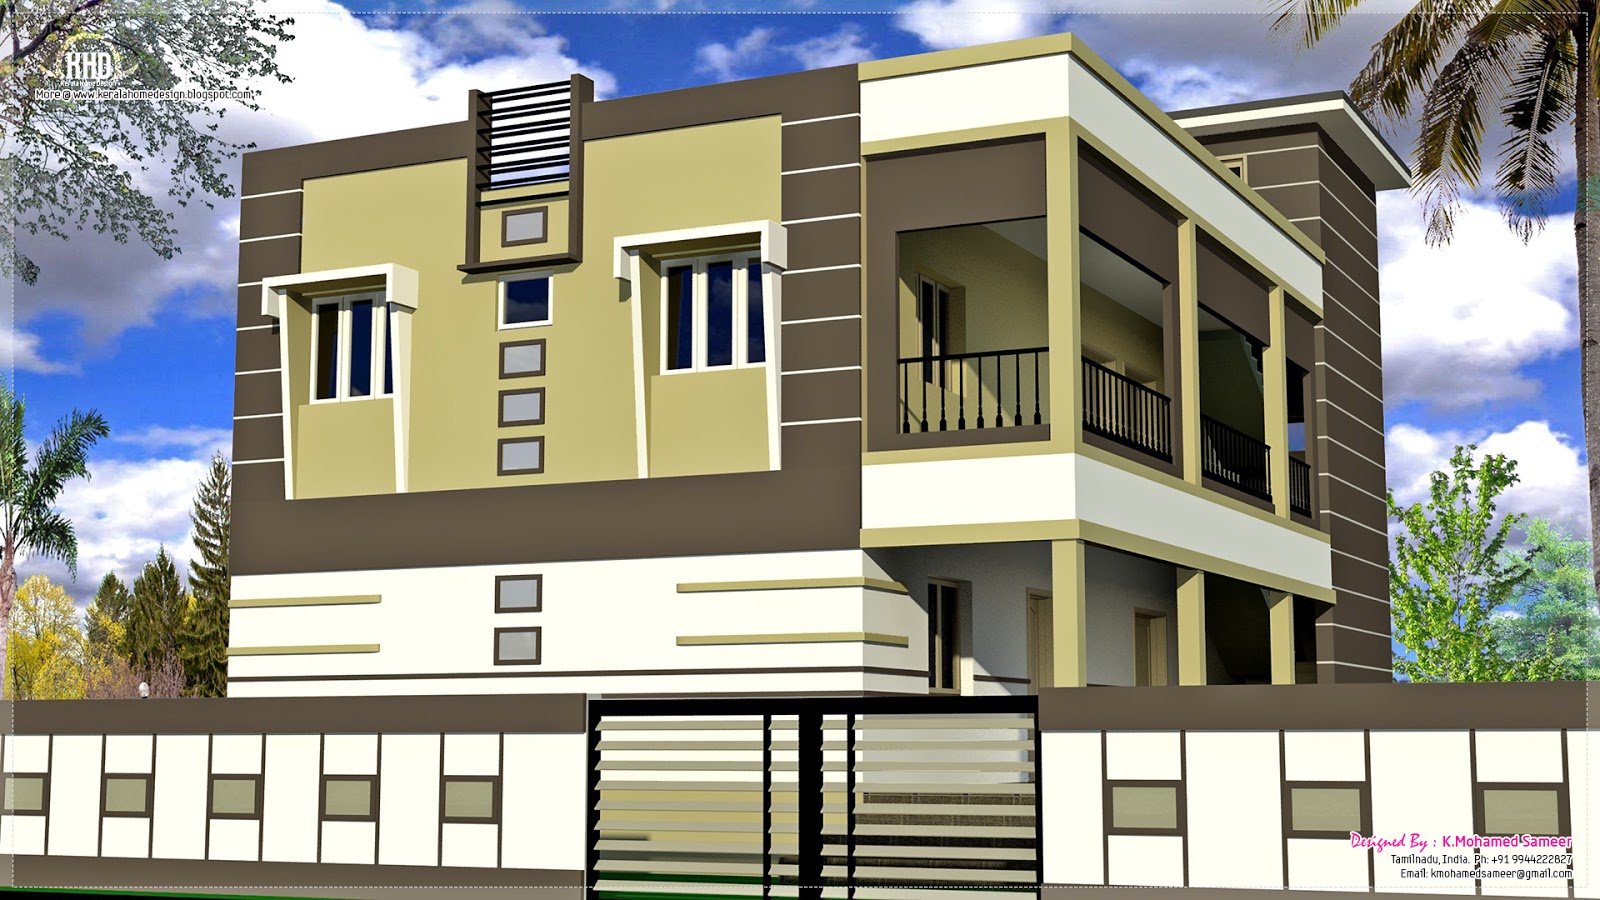 2 South Indian house exterior designs | House Design Plans